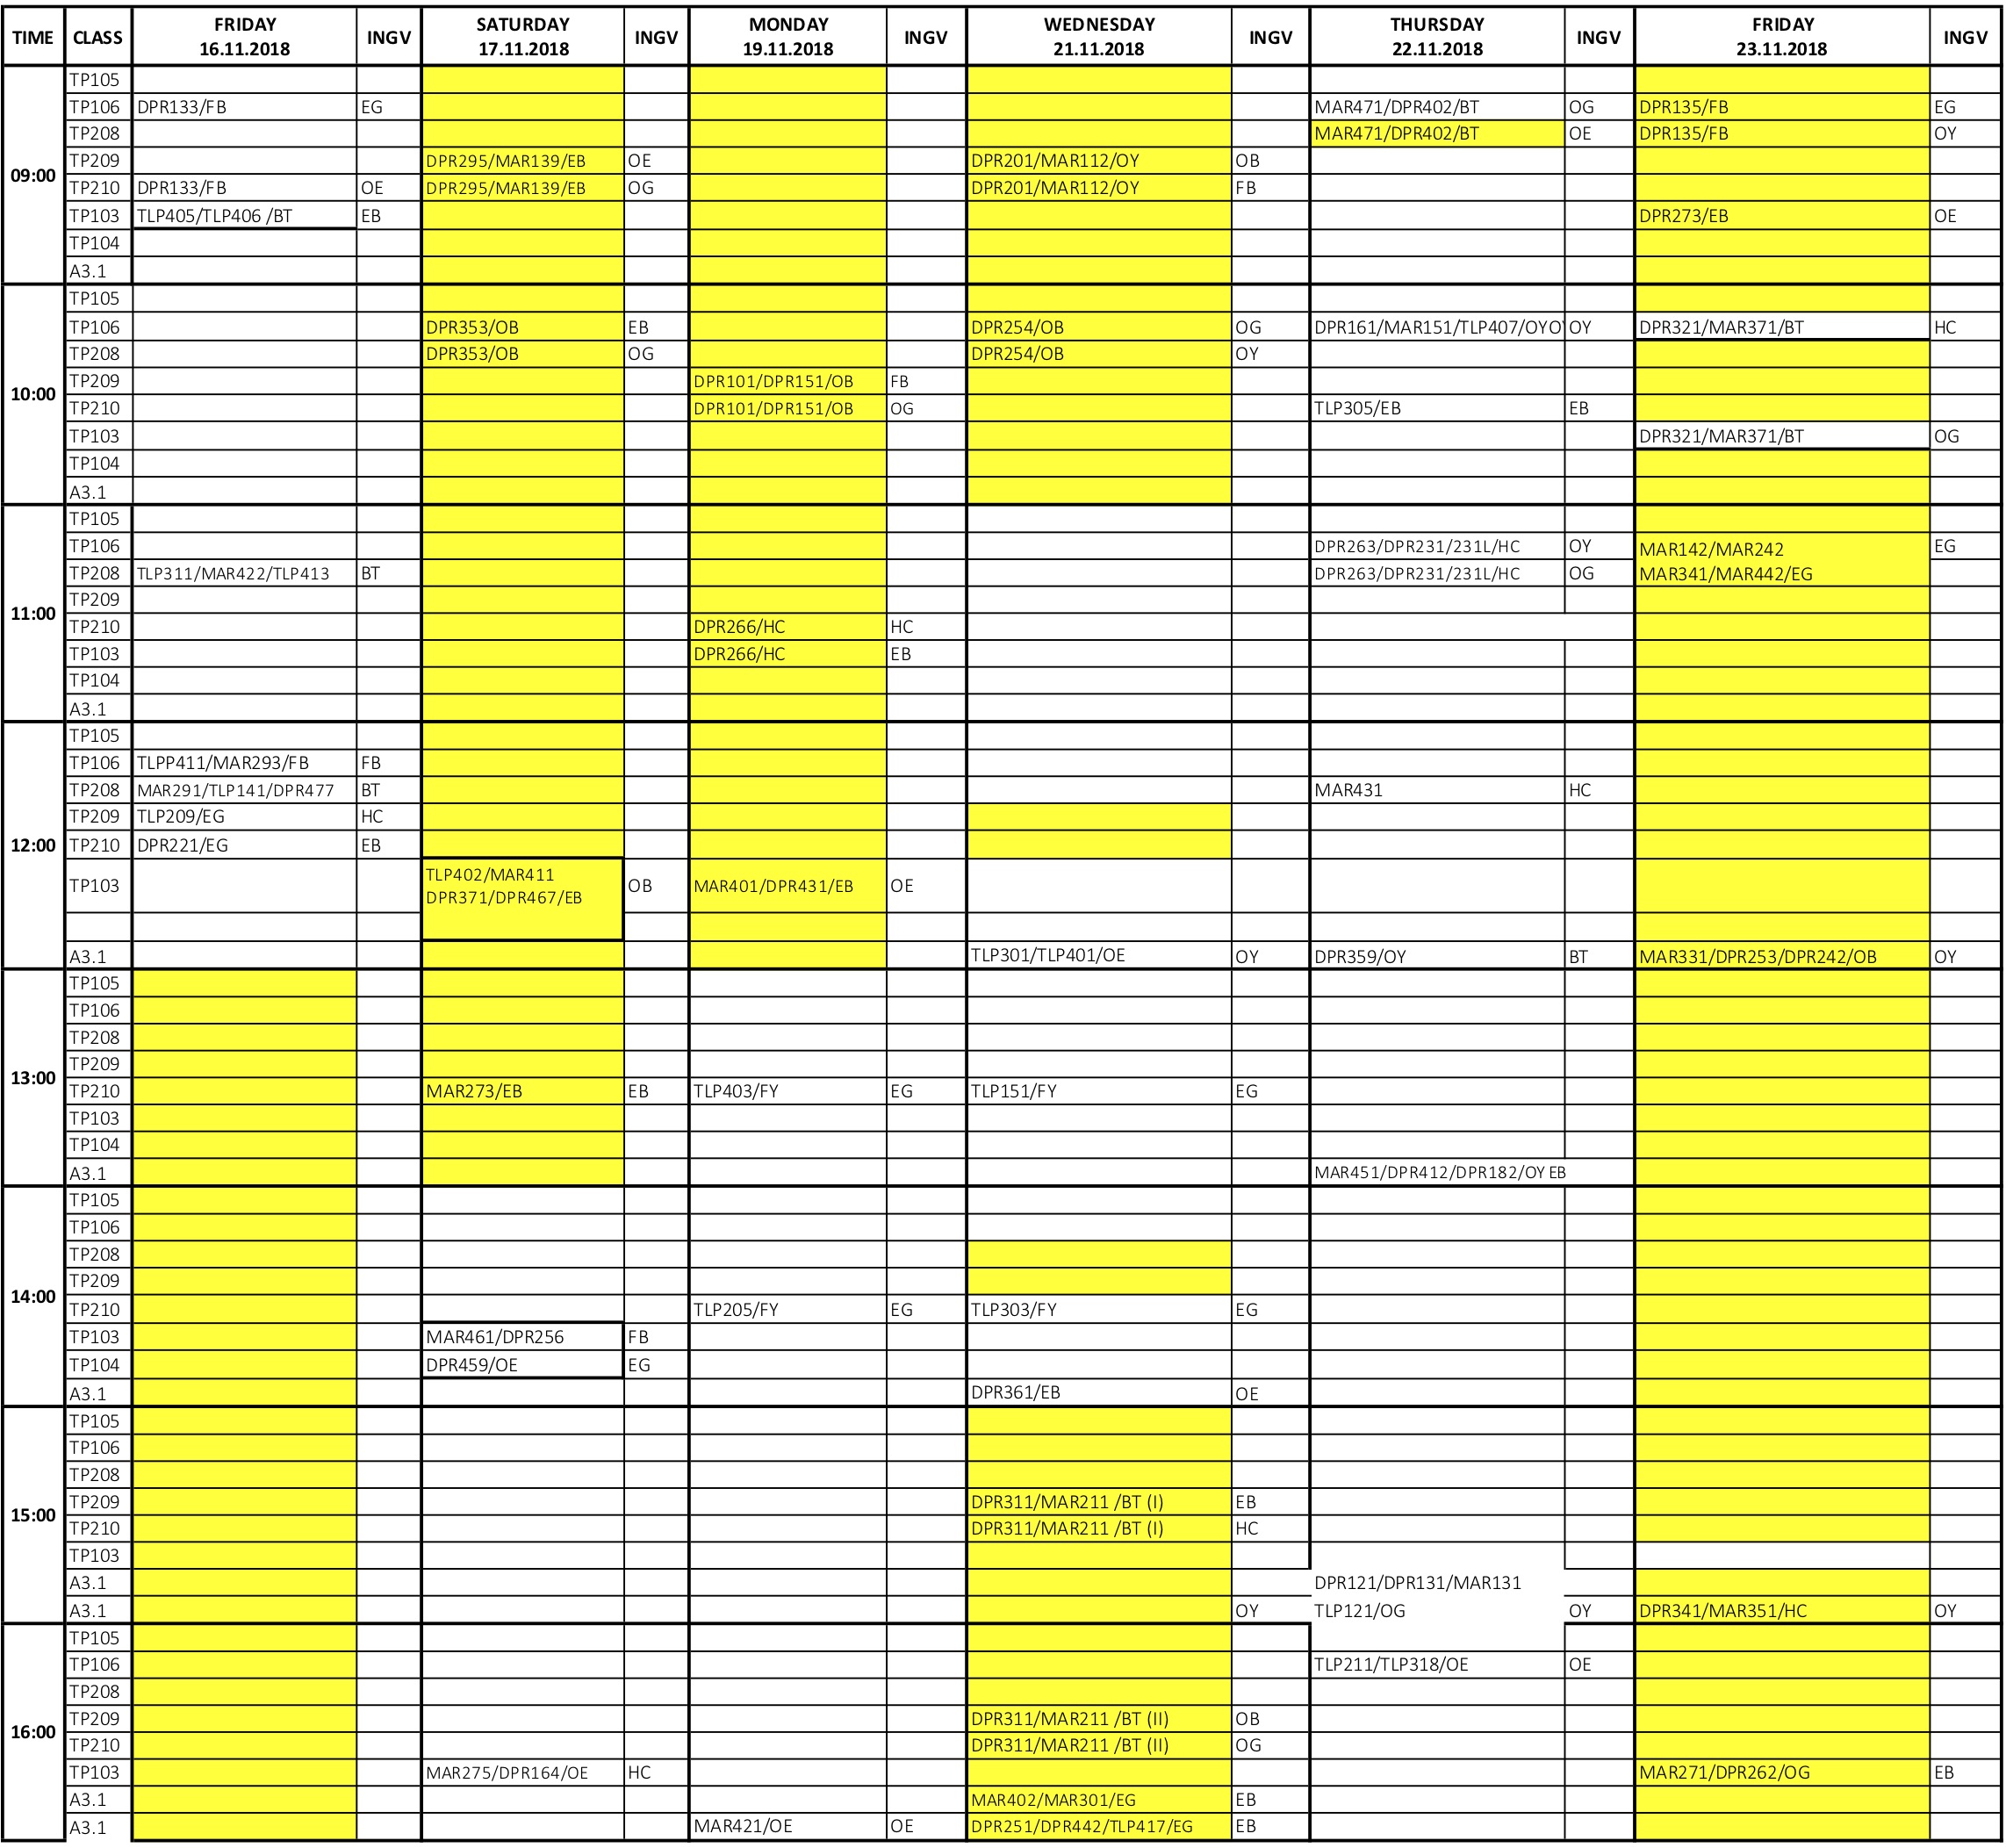 Vize zaman cizelgesi/time table of mid-terms